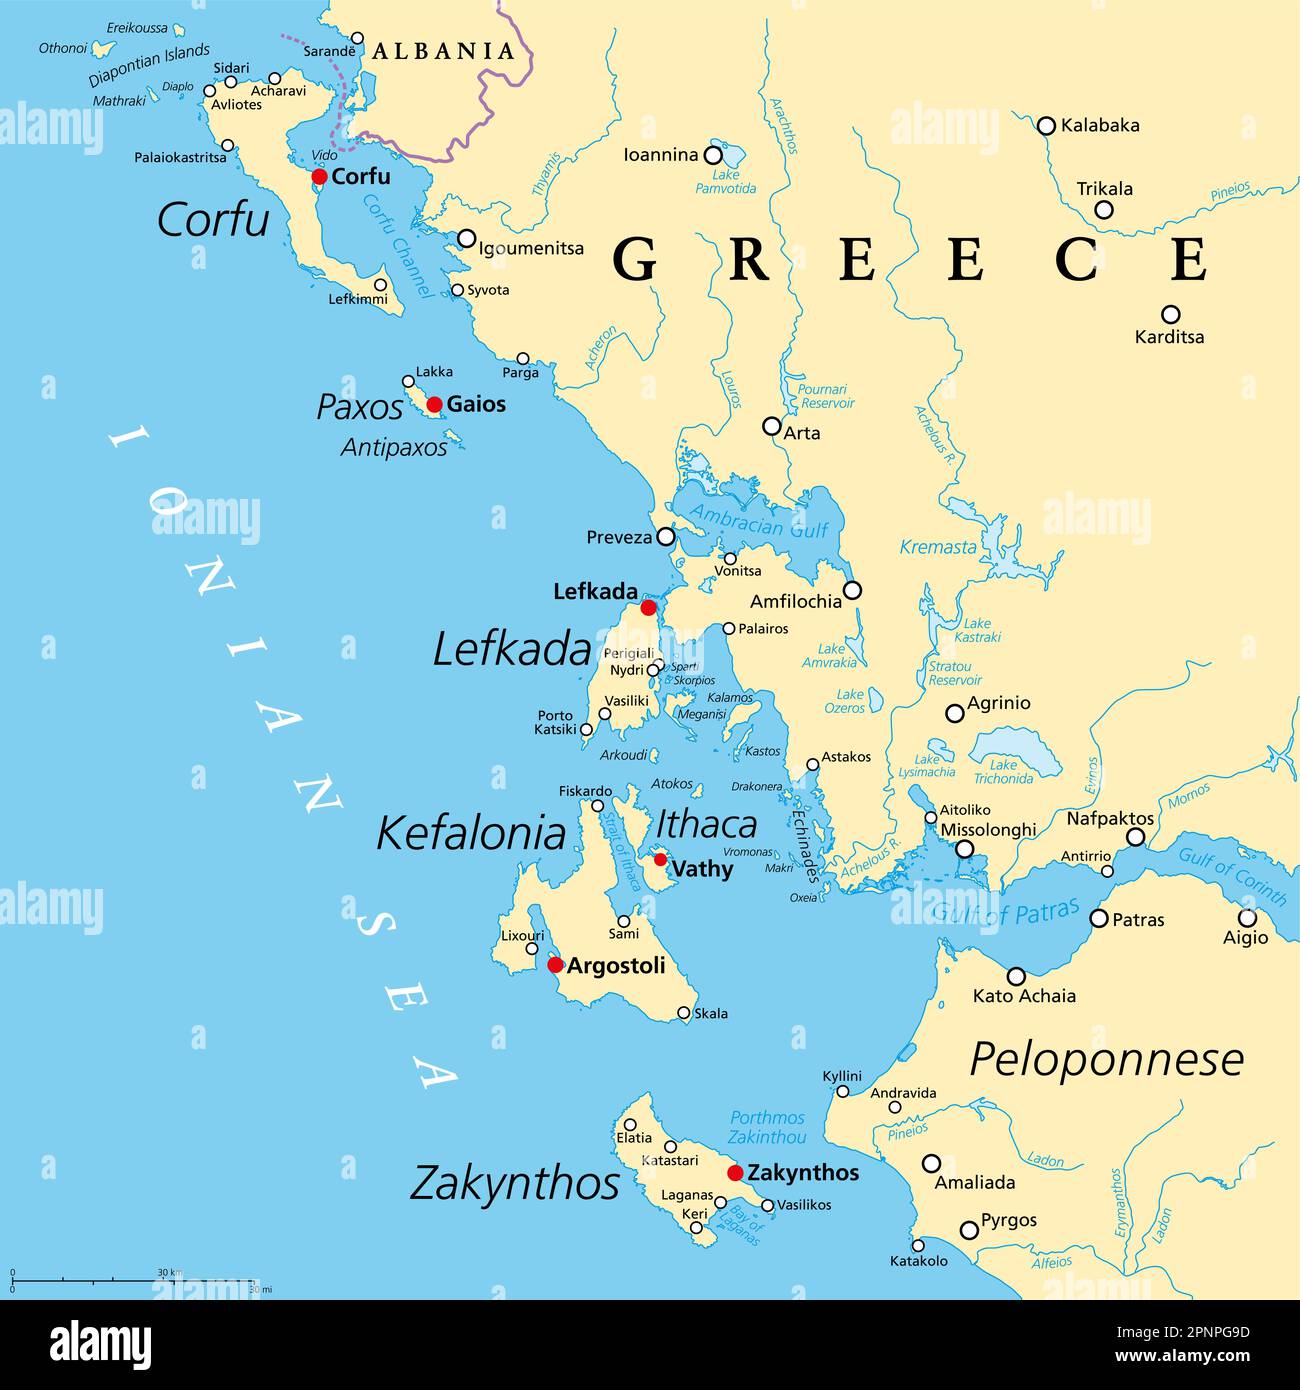 Ionian Islands Region of Greece, political map. Greek group of islands in Ionian Sea. Corfu, Paxos, Antipaxos, Lefkada, Kefalonia, Ithaca, Zakynthos. Stock Photo